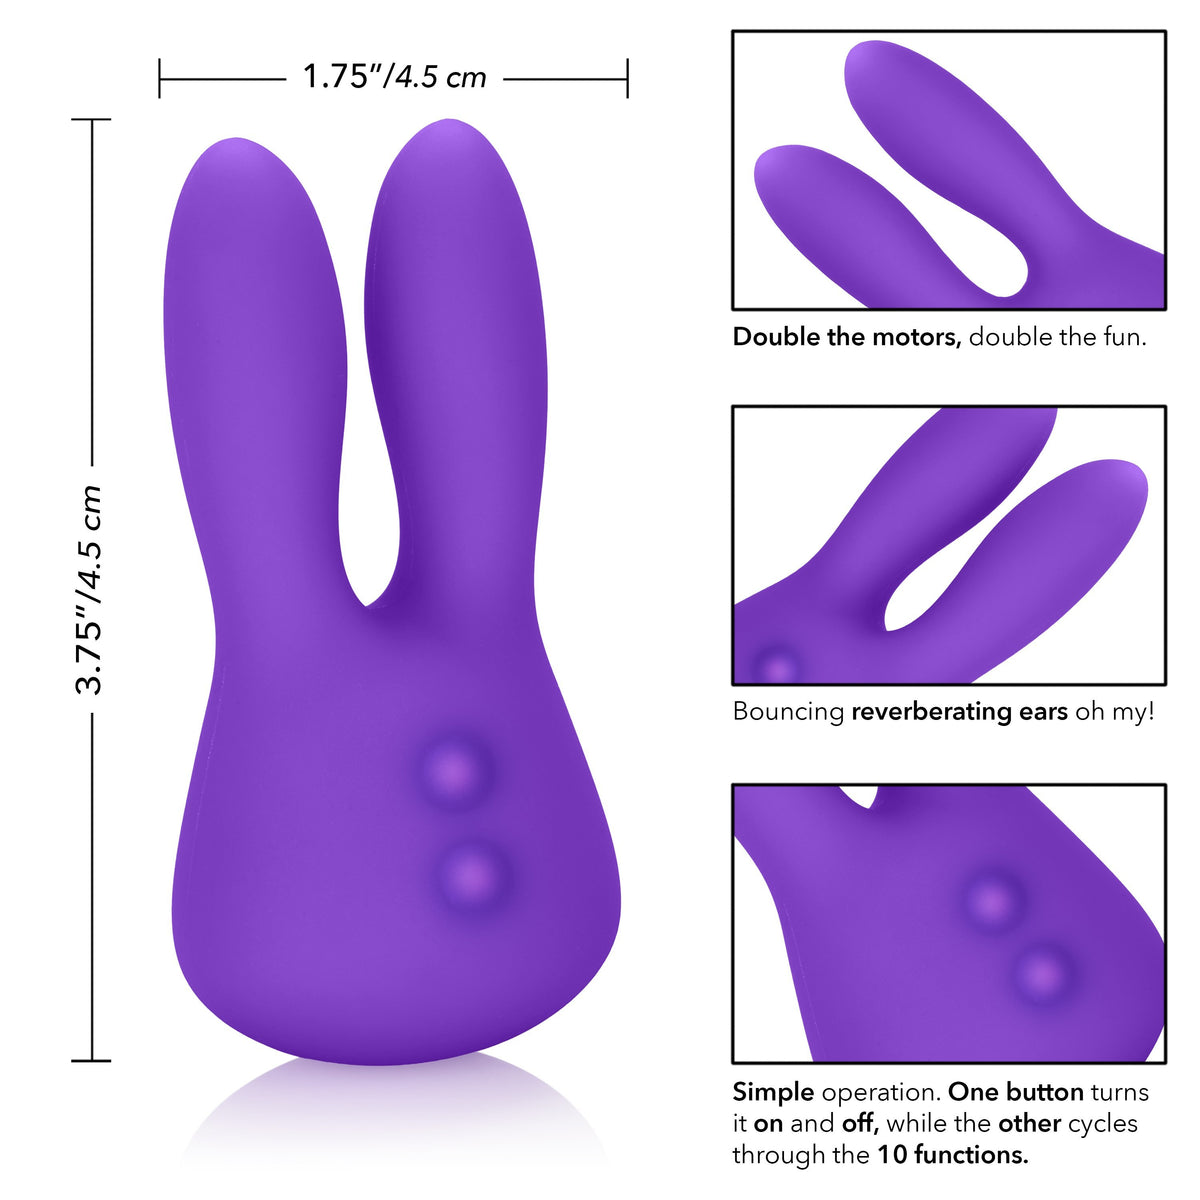 California Exotics - Mini Marvels Silicone Marvelous Bunny Clit Massager  (Purple)    Clit Massager (Vibration) Rechargeable